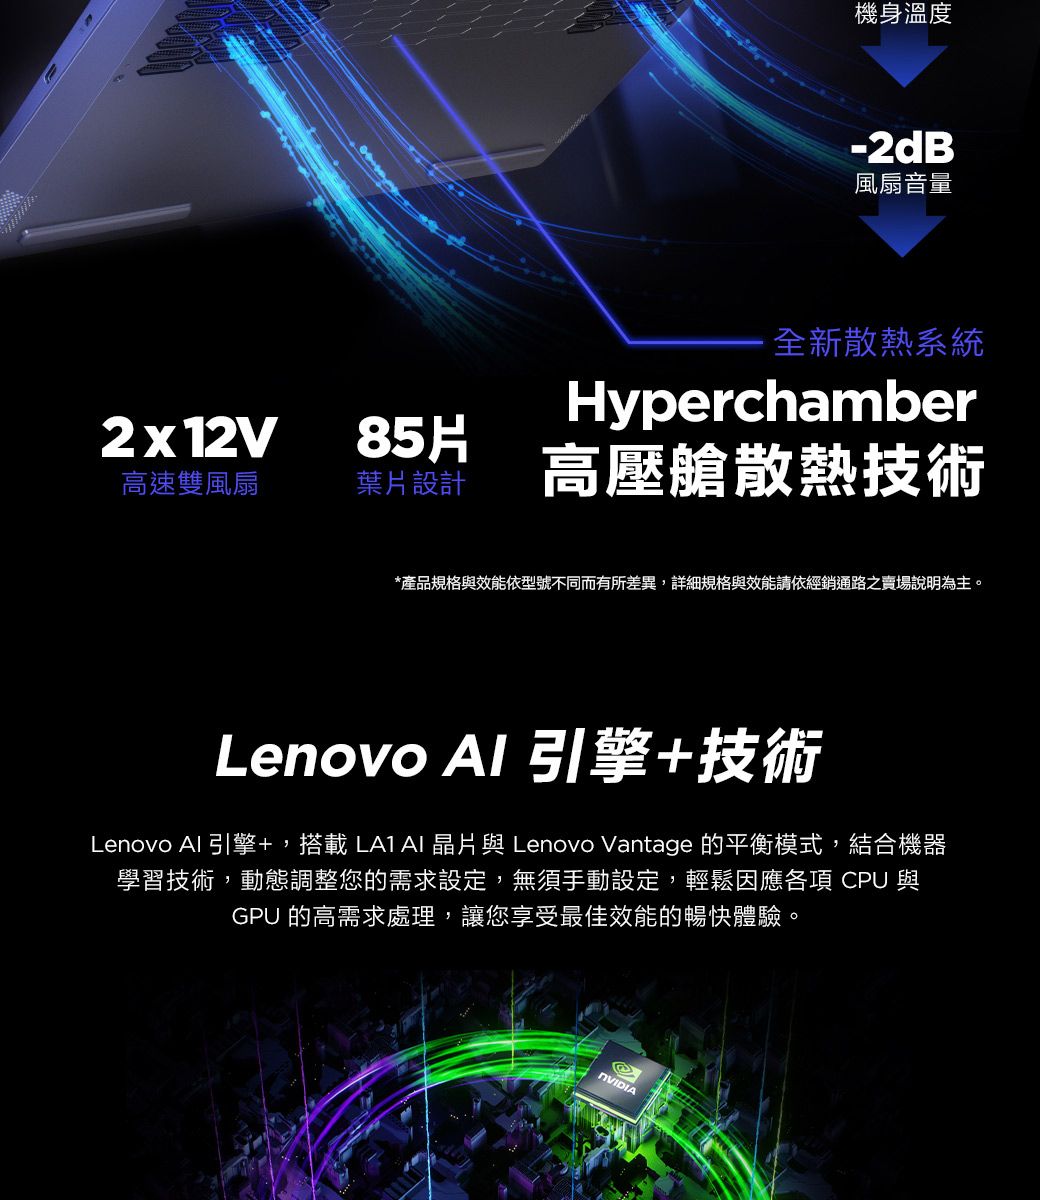 2x12V85片高速雙風扇葉片設計機身溫度-2dB風扇音量全新散熱系統Hyperchamber高壓艙散熱技術*產品規格與效能依型號不同而有所差異,詳細規格與效能請依經銷通路之賣場說明為主。Lenovo  引擎+技術Lenovo 引擎+,搭載LA1 晶片與 Lenovo Vantage 的平衡模式,結合機器學習技術,動態調整您的需求設定,無須手動設定,輕鬆因應  與GPU 的高需求處理,讓您享受最佳效能的暢快體驗。